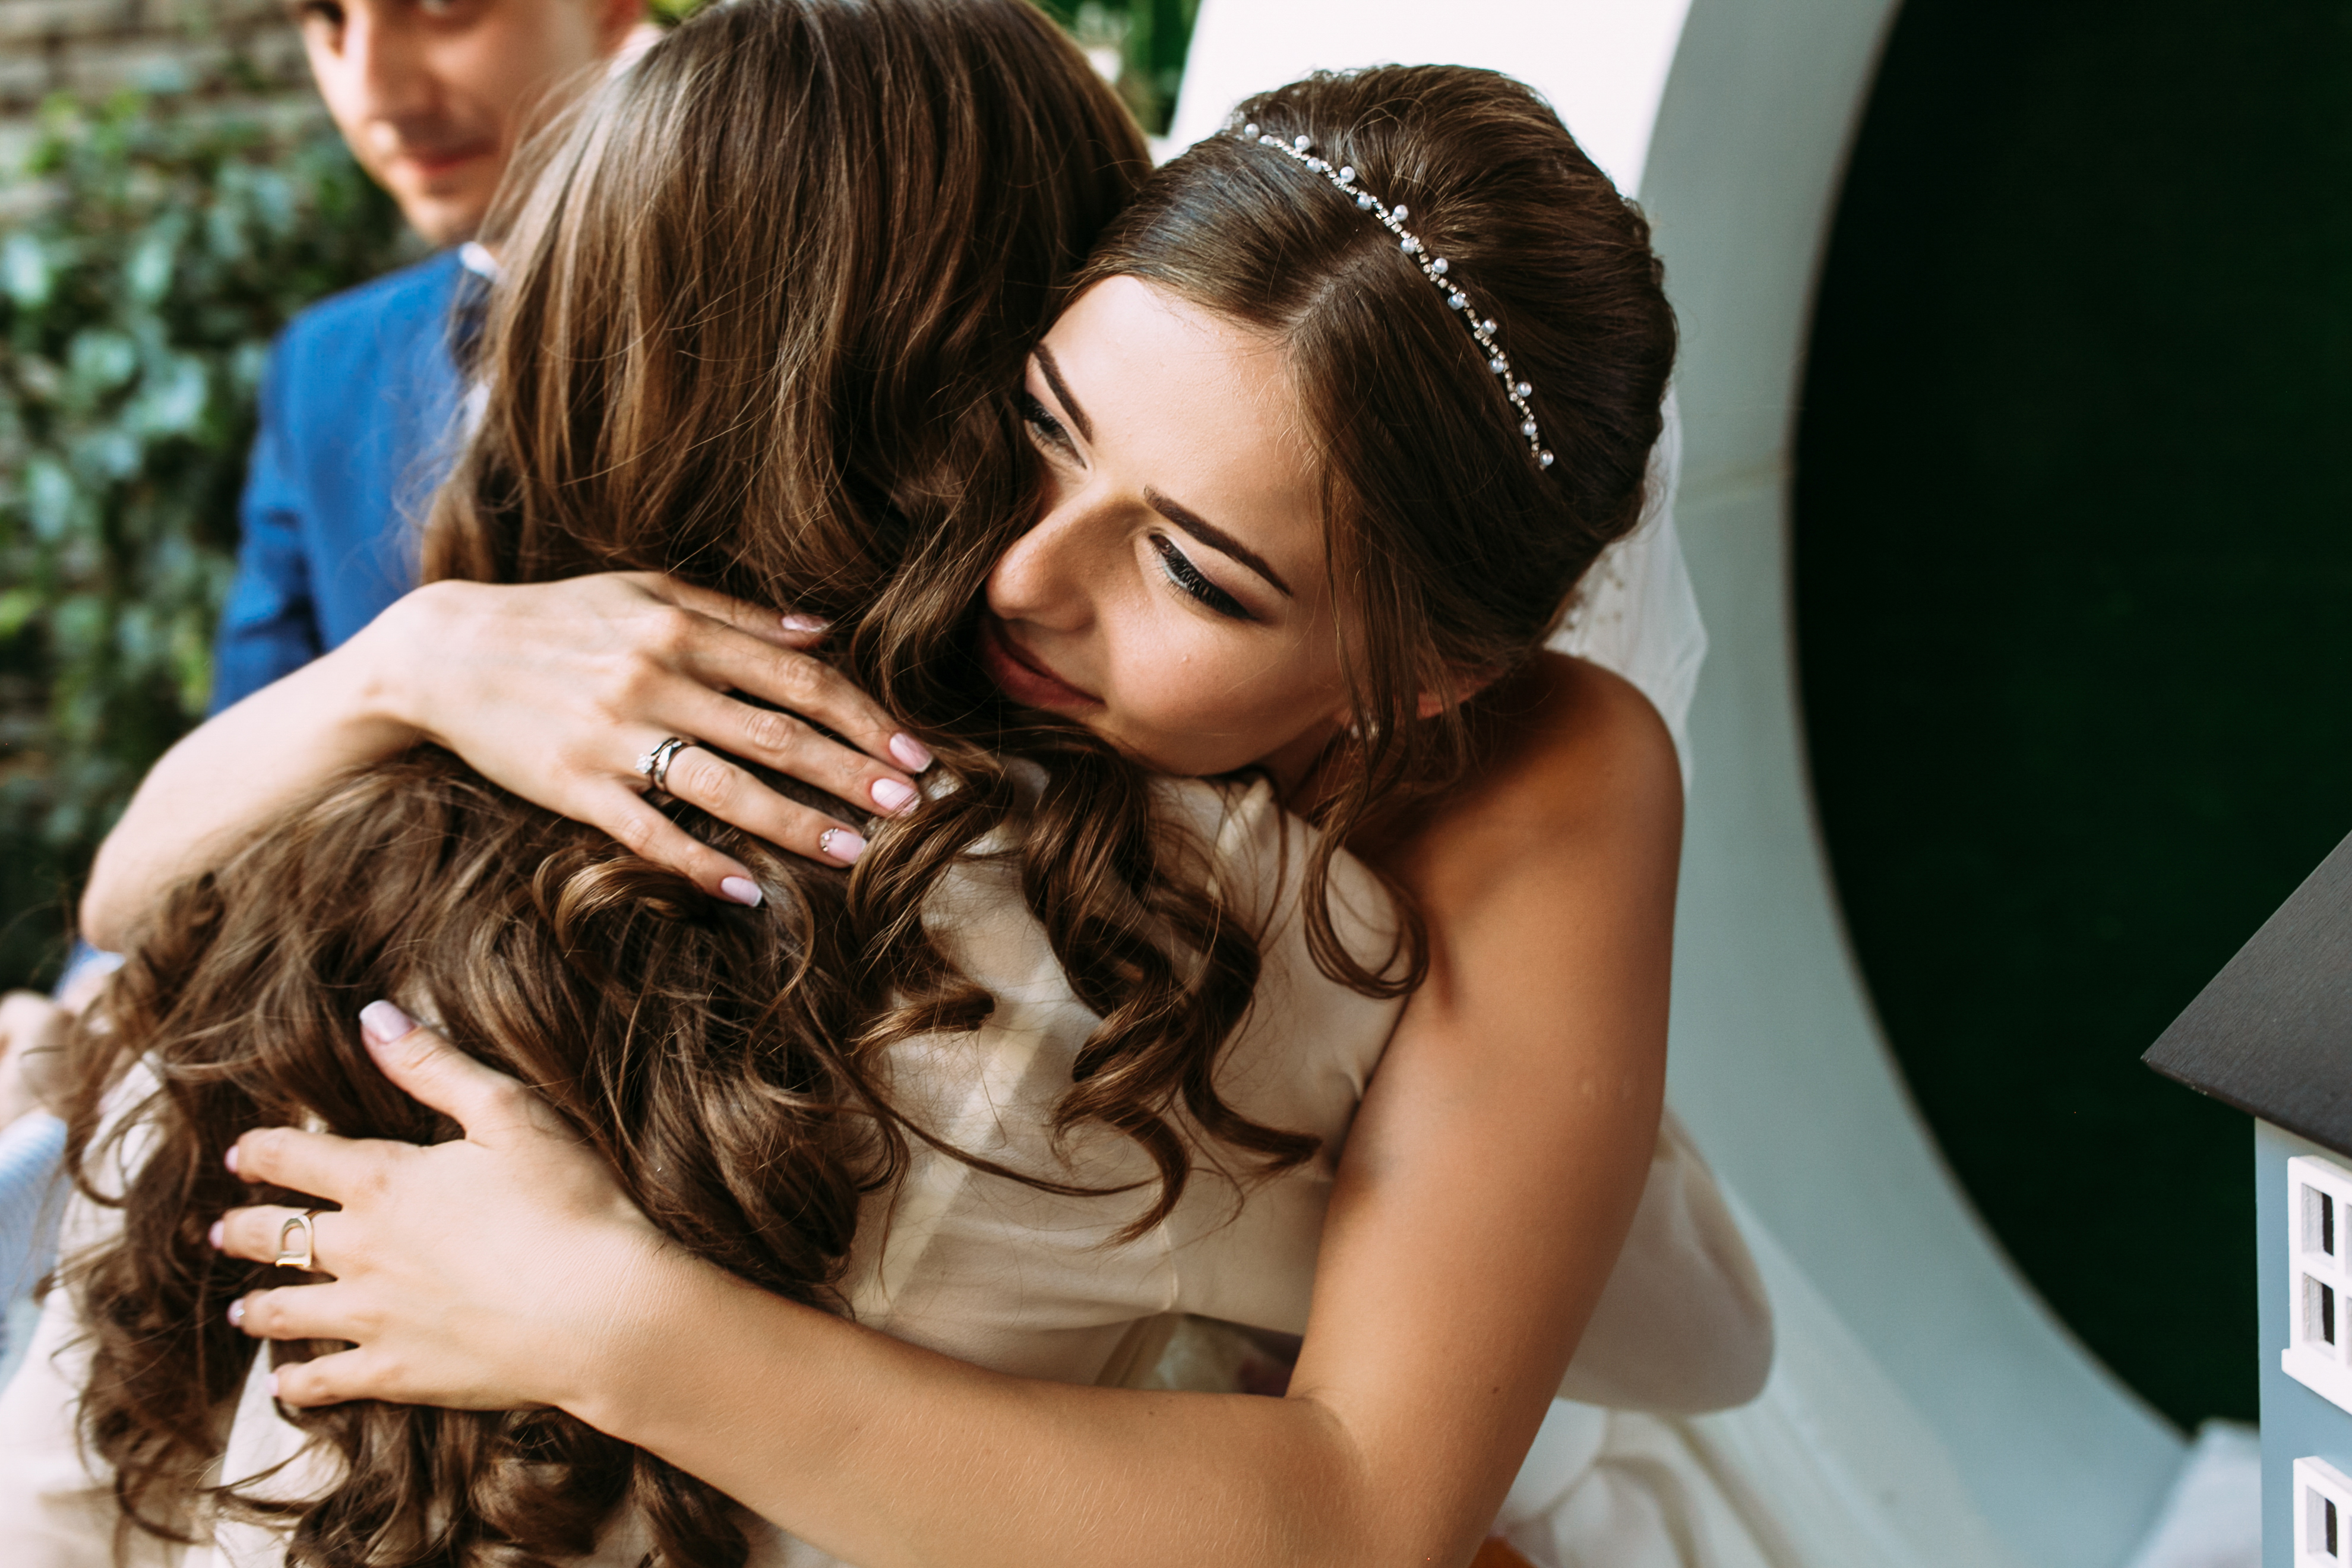 La mariée serre son amie dans ses bras | Source : Shutterstock